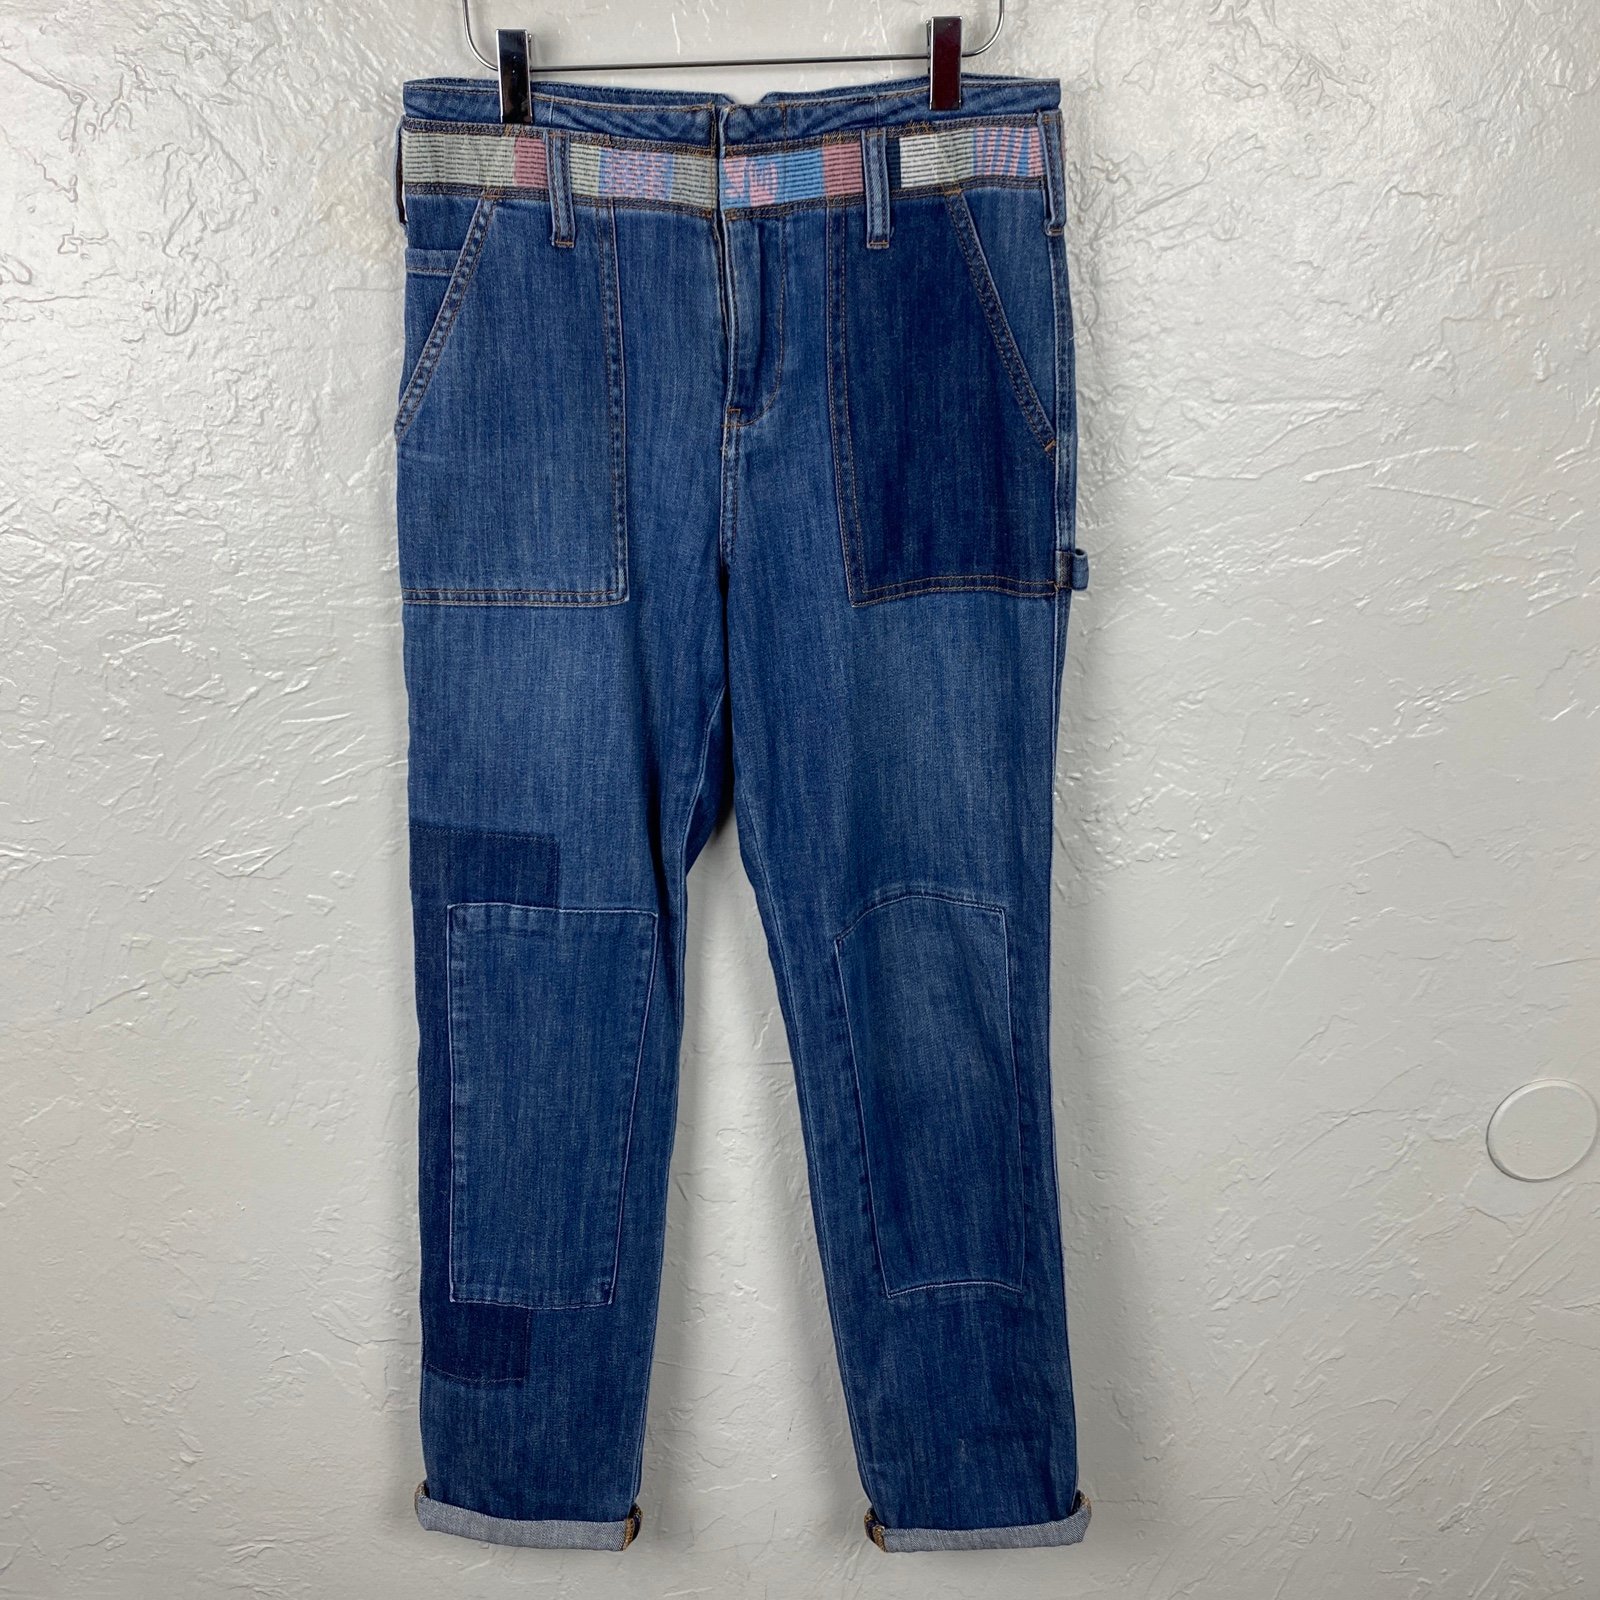 Beautiful Anthropologie: Pilcro High Rise Patchwork carpenter boyfriend jeans 26 kFfpKqzcJ New Style